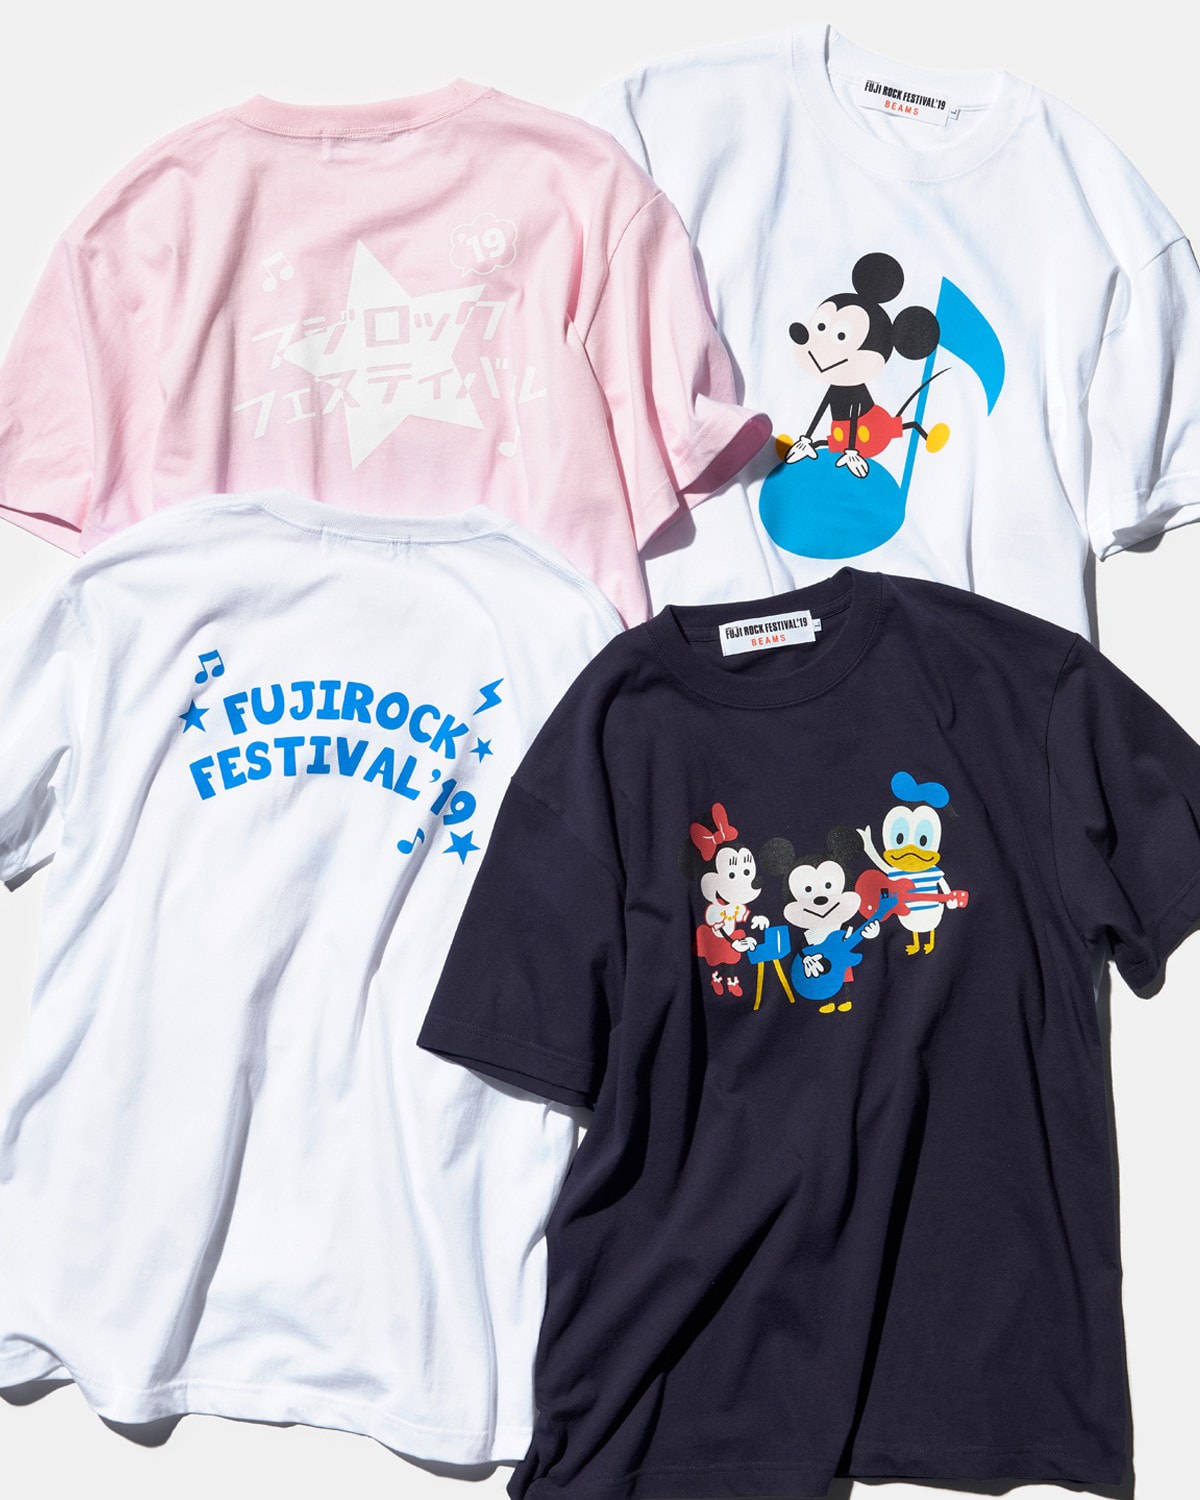 BEAMS x Fuji Rock 2019 聯名限定 T-Shirt 系列登場